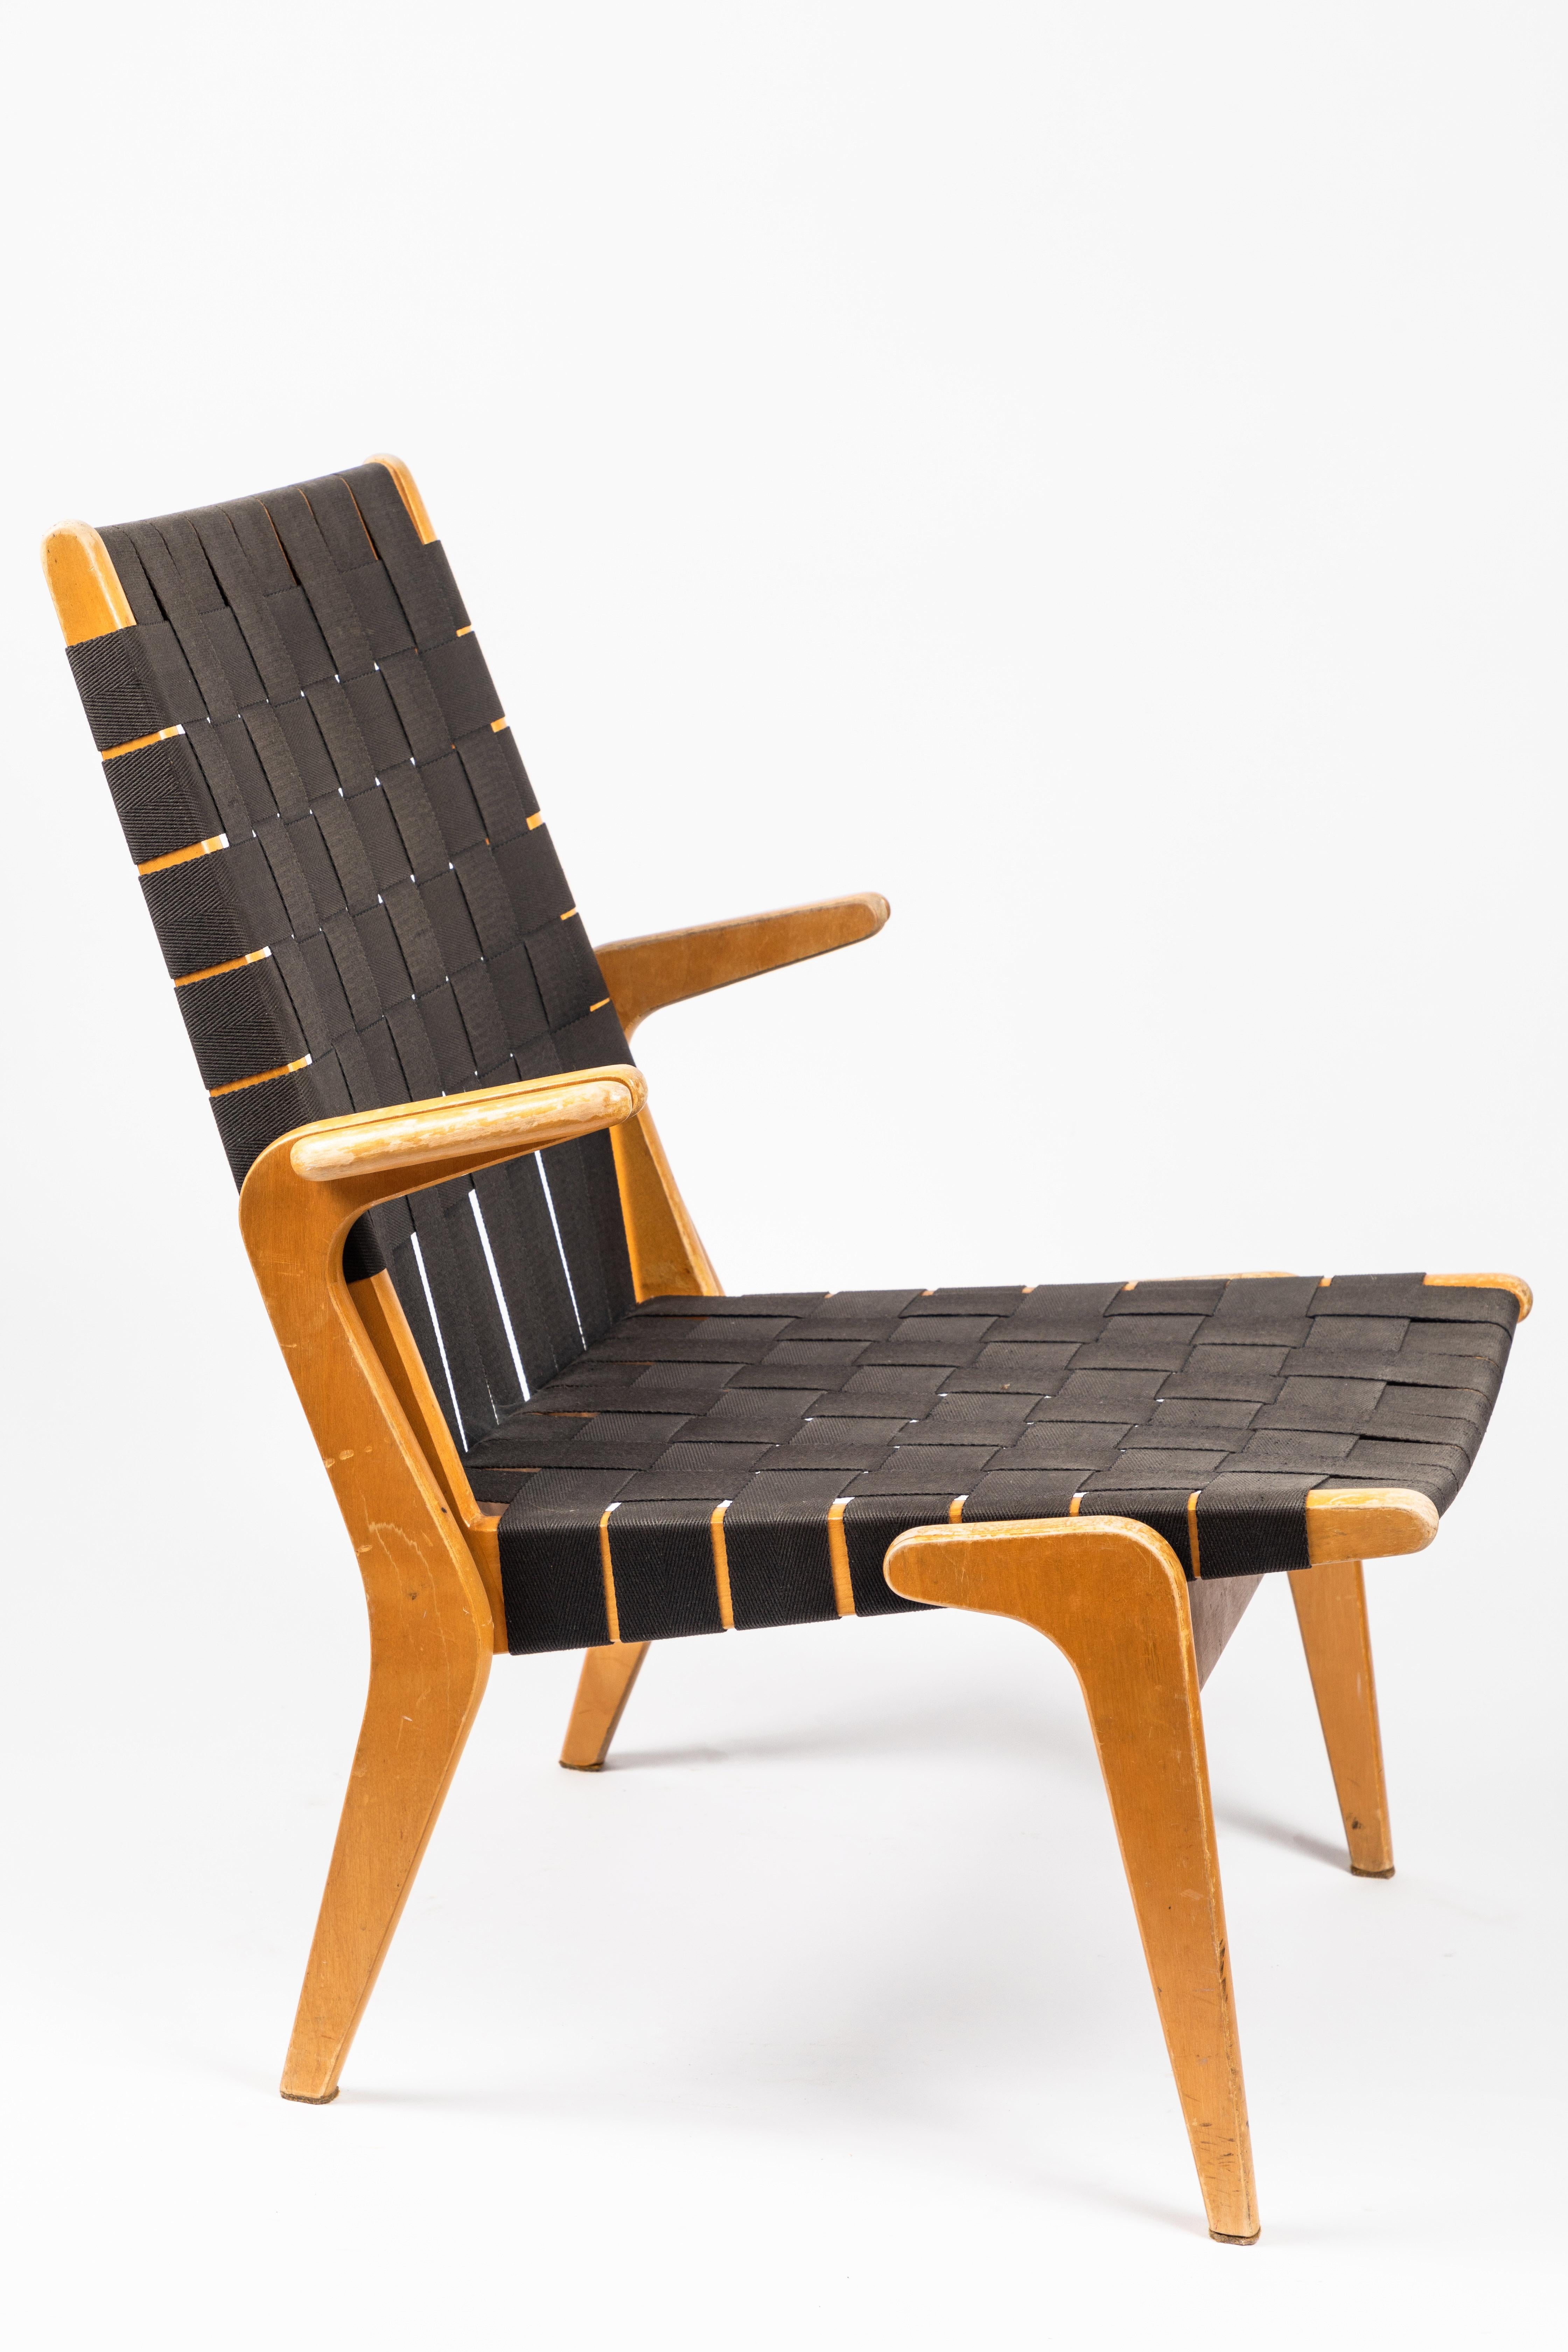 Finnish Rare 1950s Colette Lounge Chair by Ilmari Tapiovaara